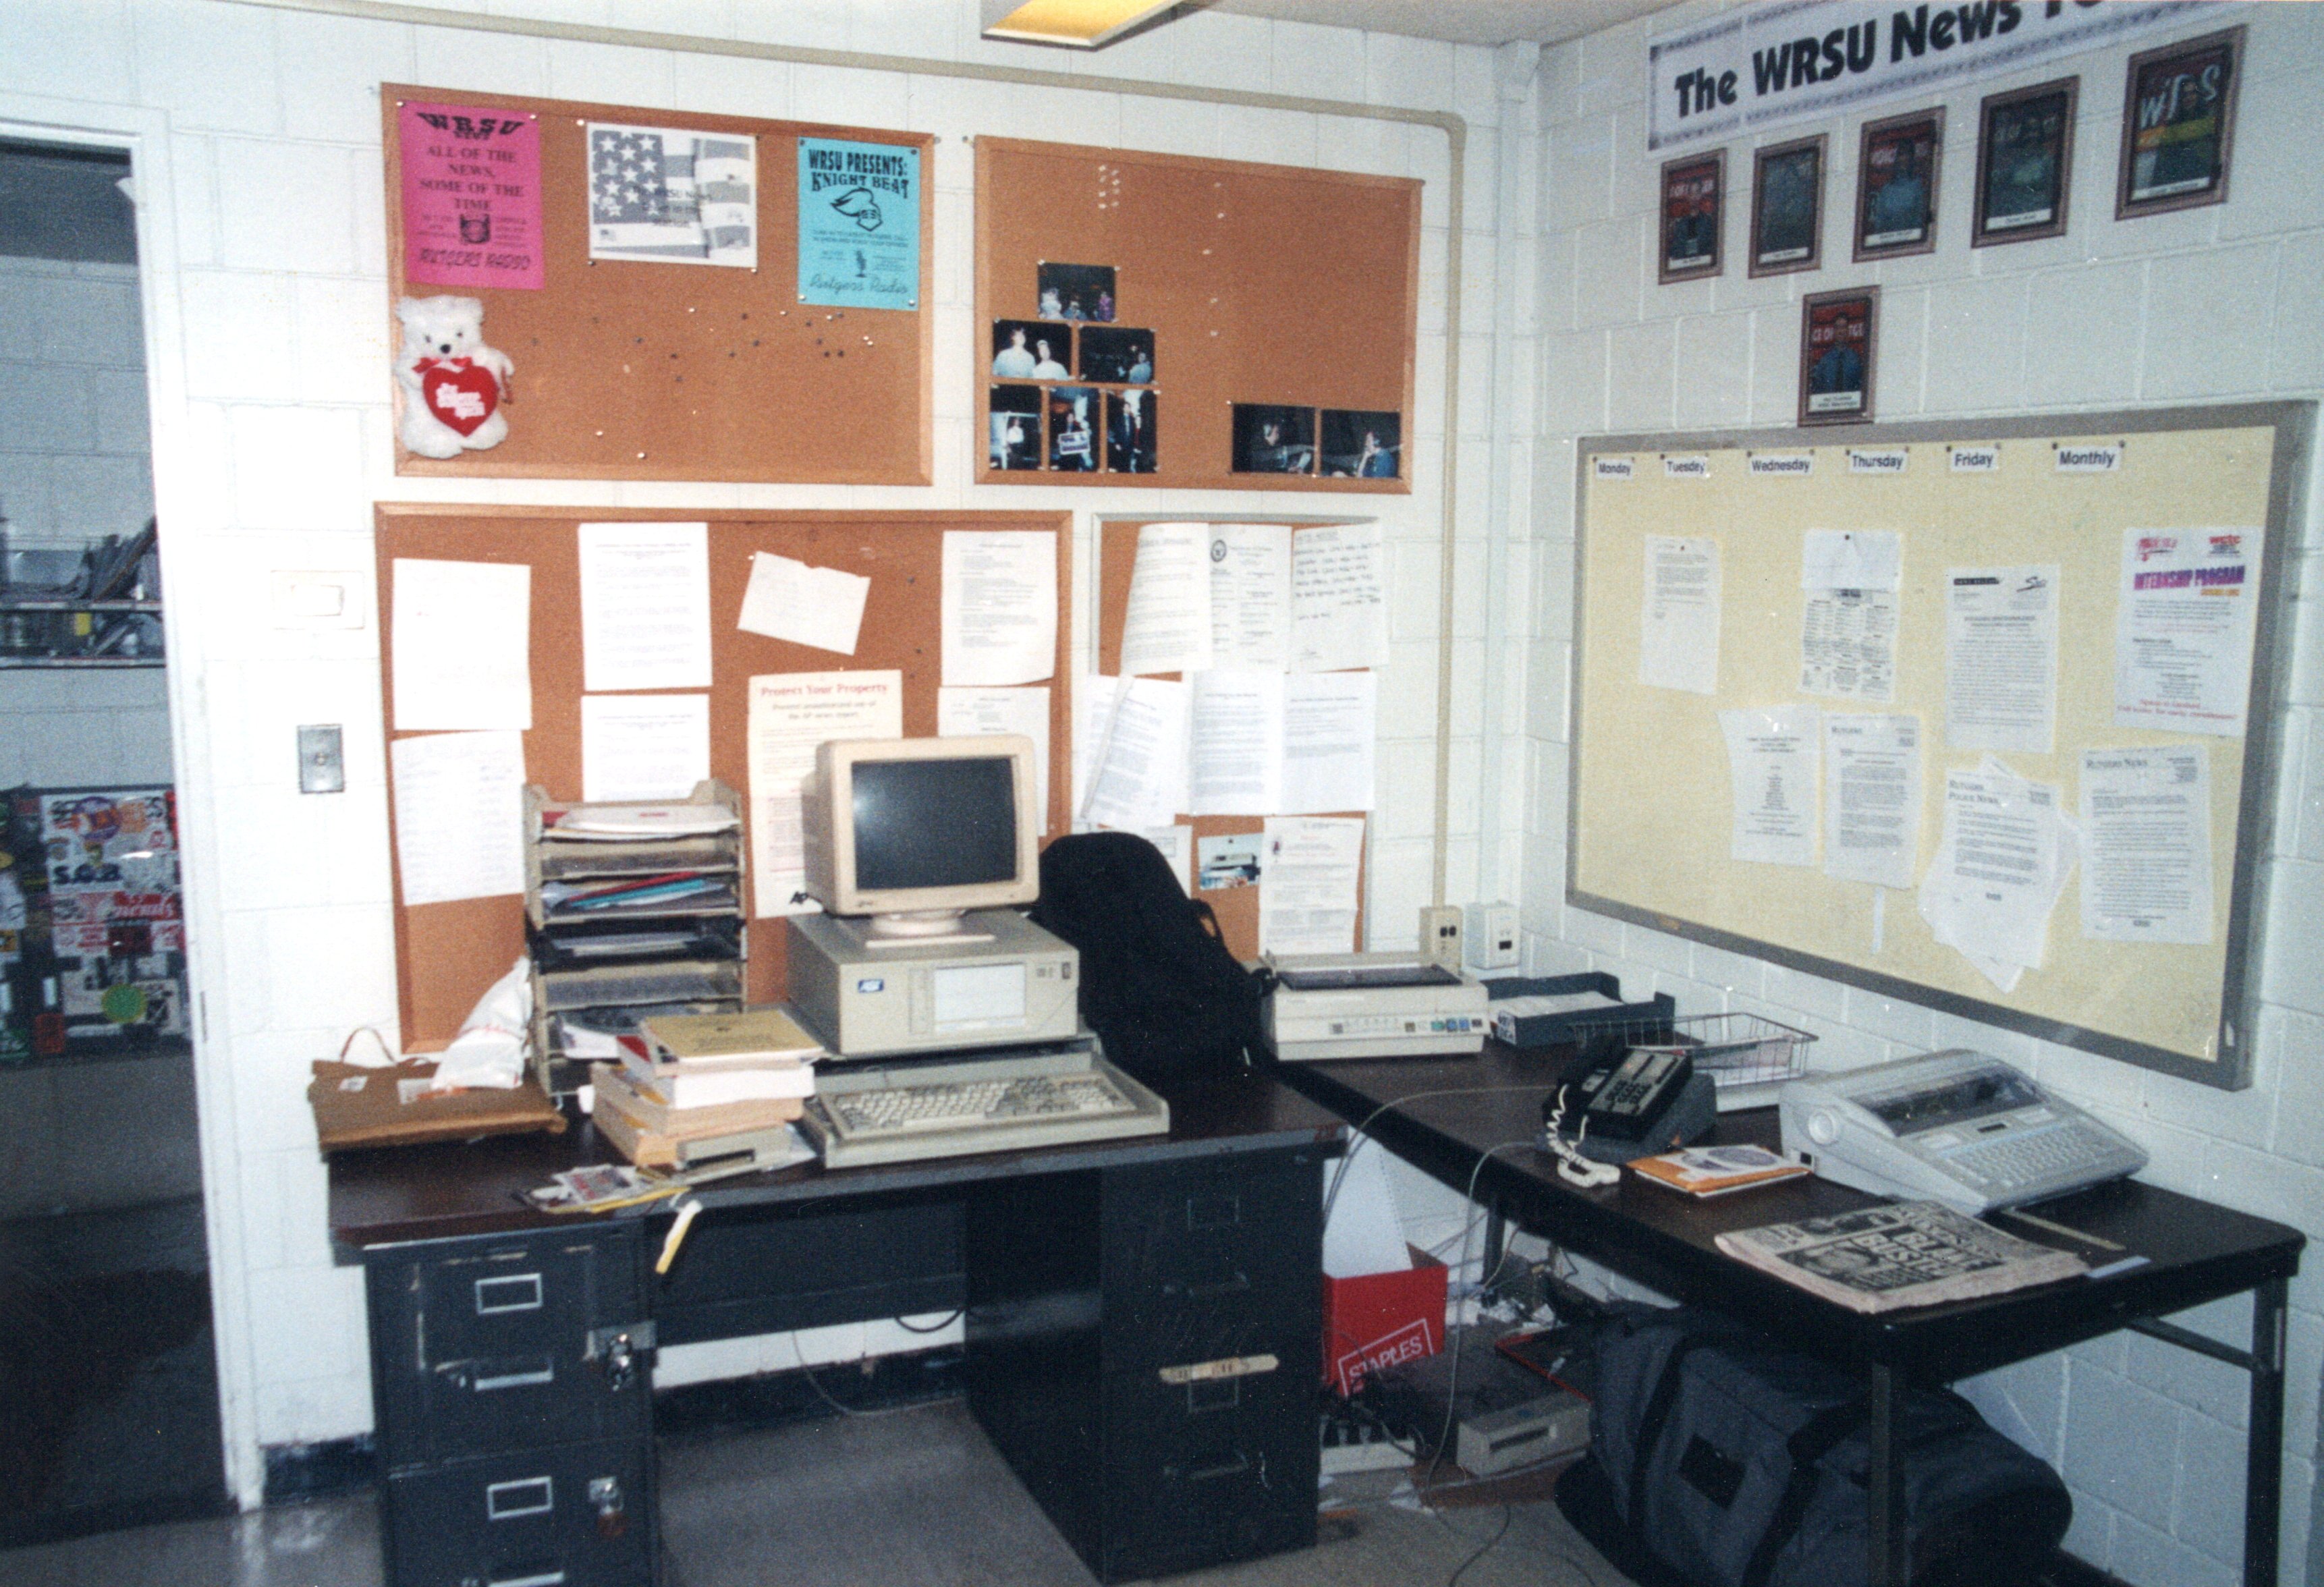 2002 - News Room - AP computer - Dot Matrix Printer and Type Writer.